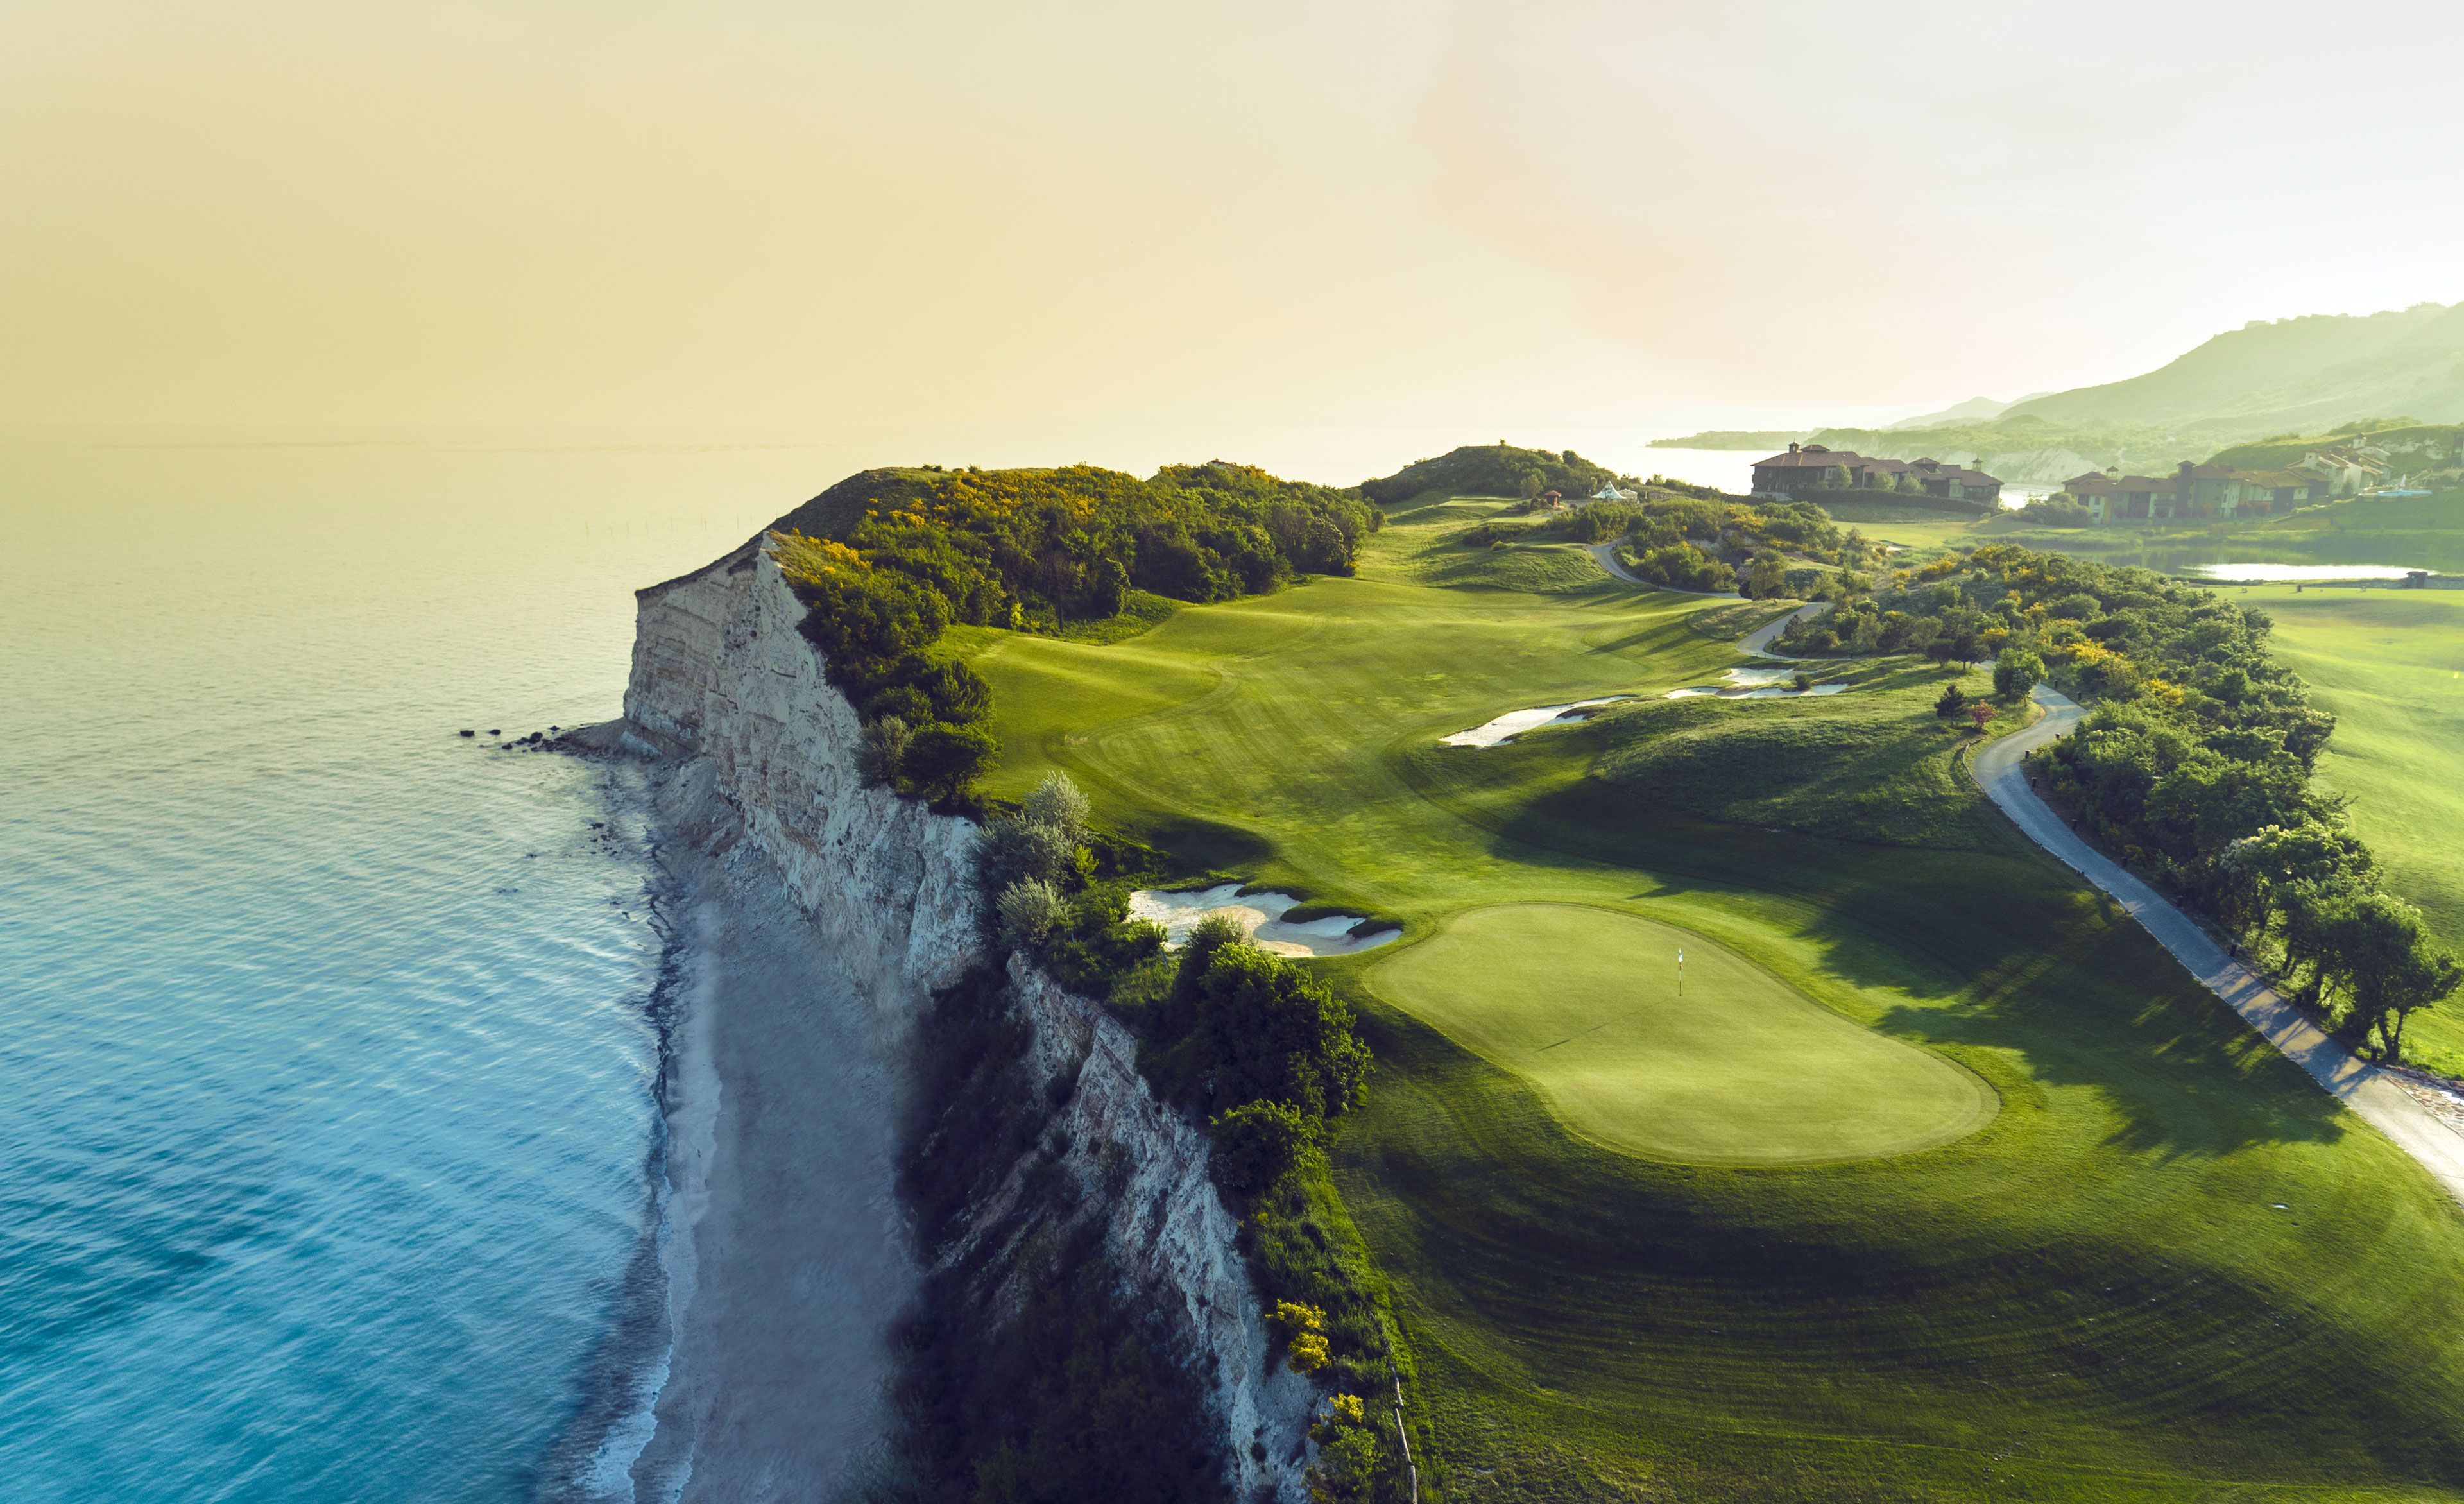 4.Thracian-Cliffs-Golf-Course-Panorama-(scal).jpg